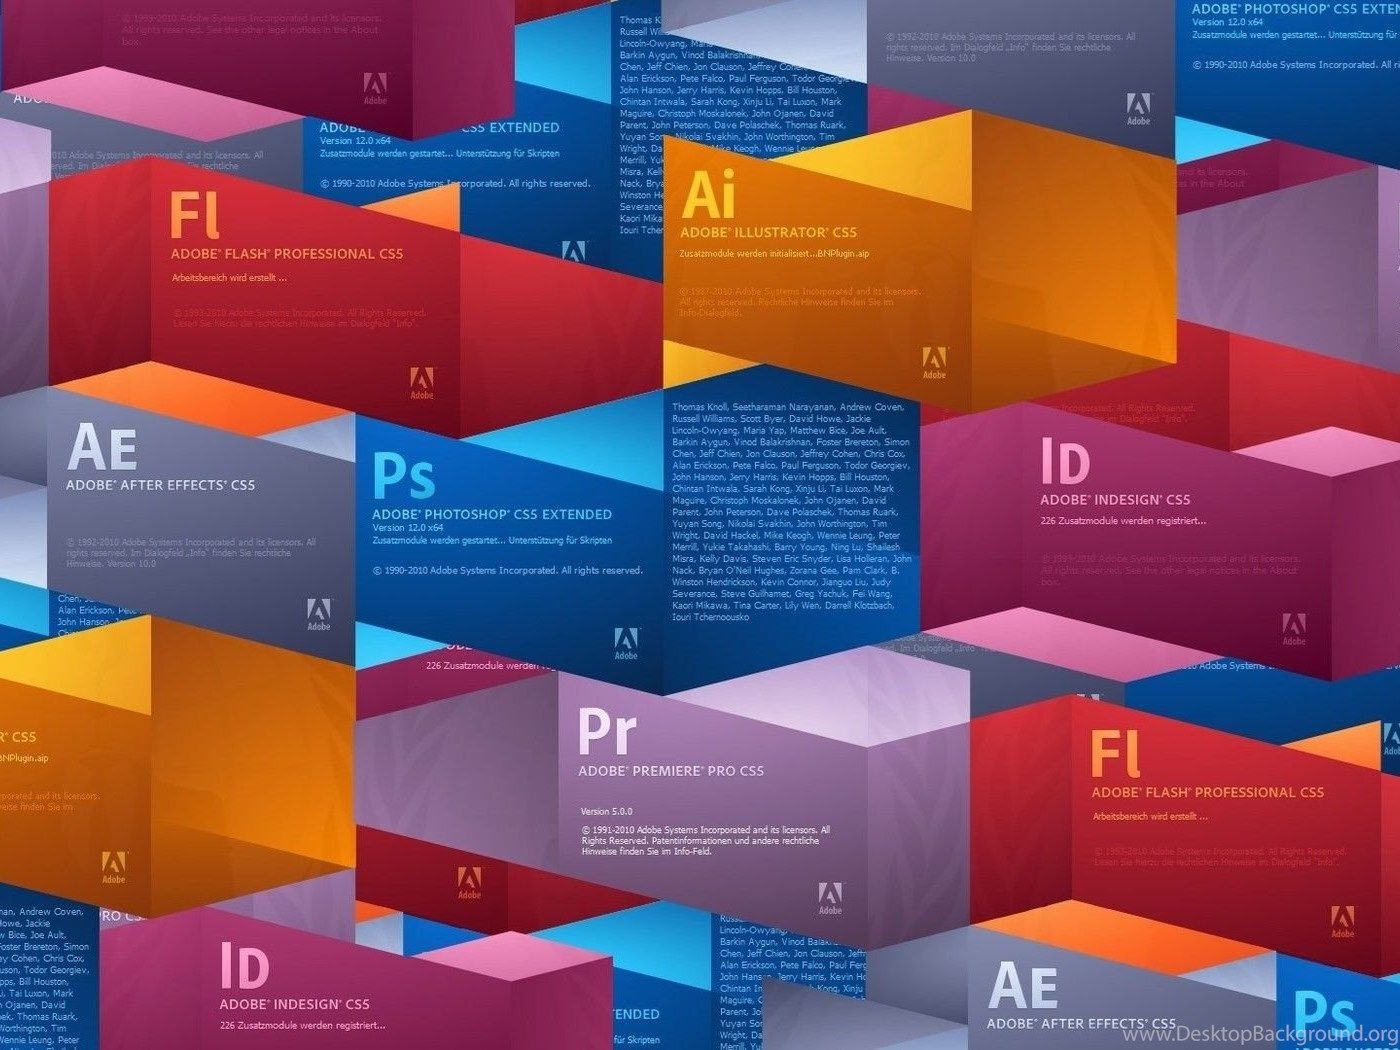 Adobe Programs Wallpaper Computer Wallpaper Desktop Background